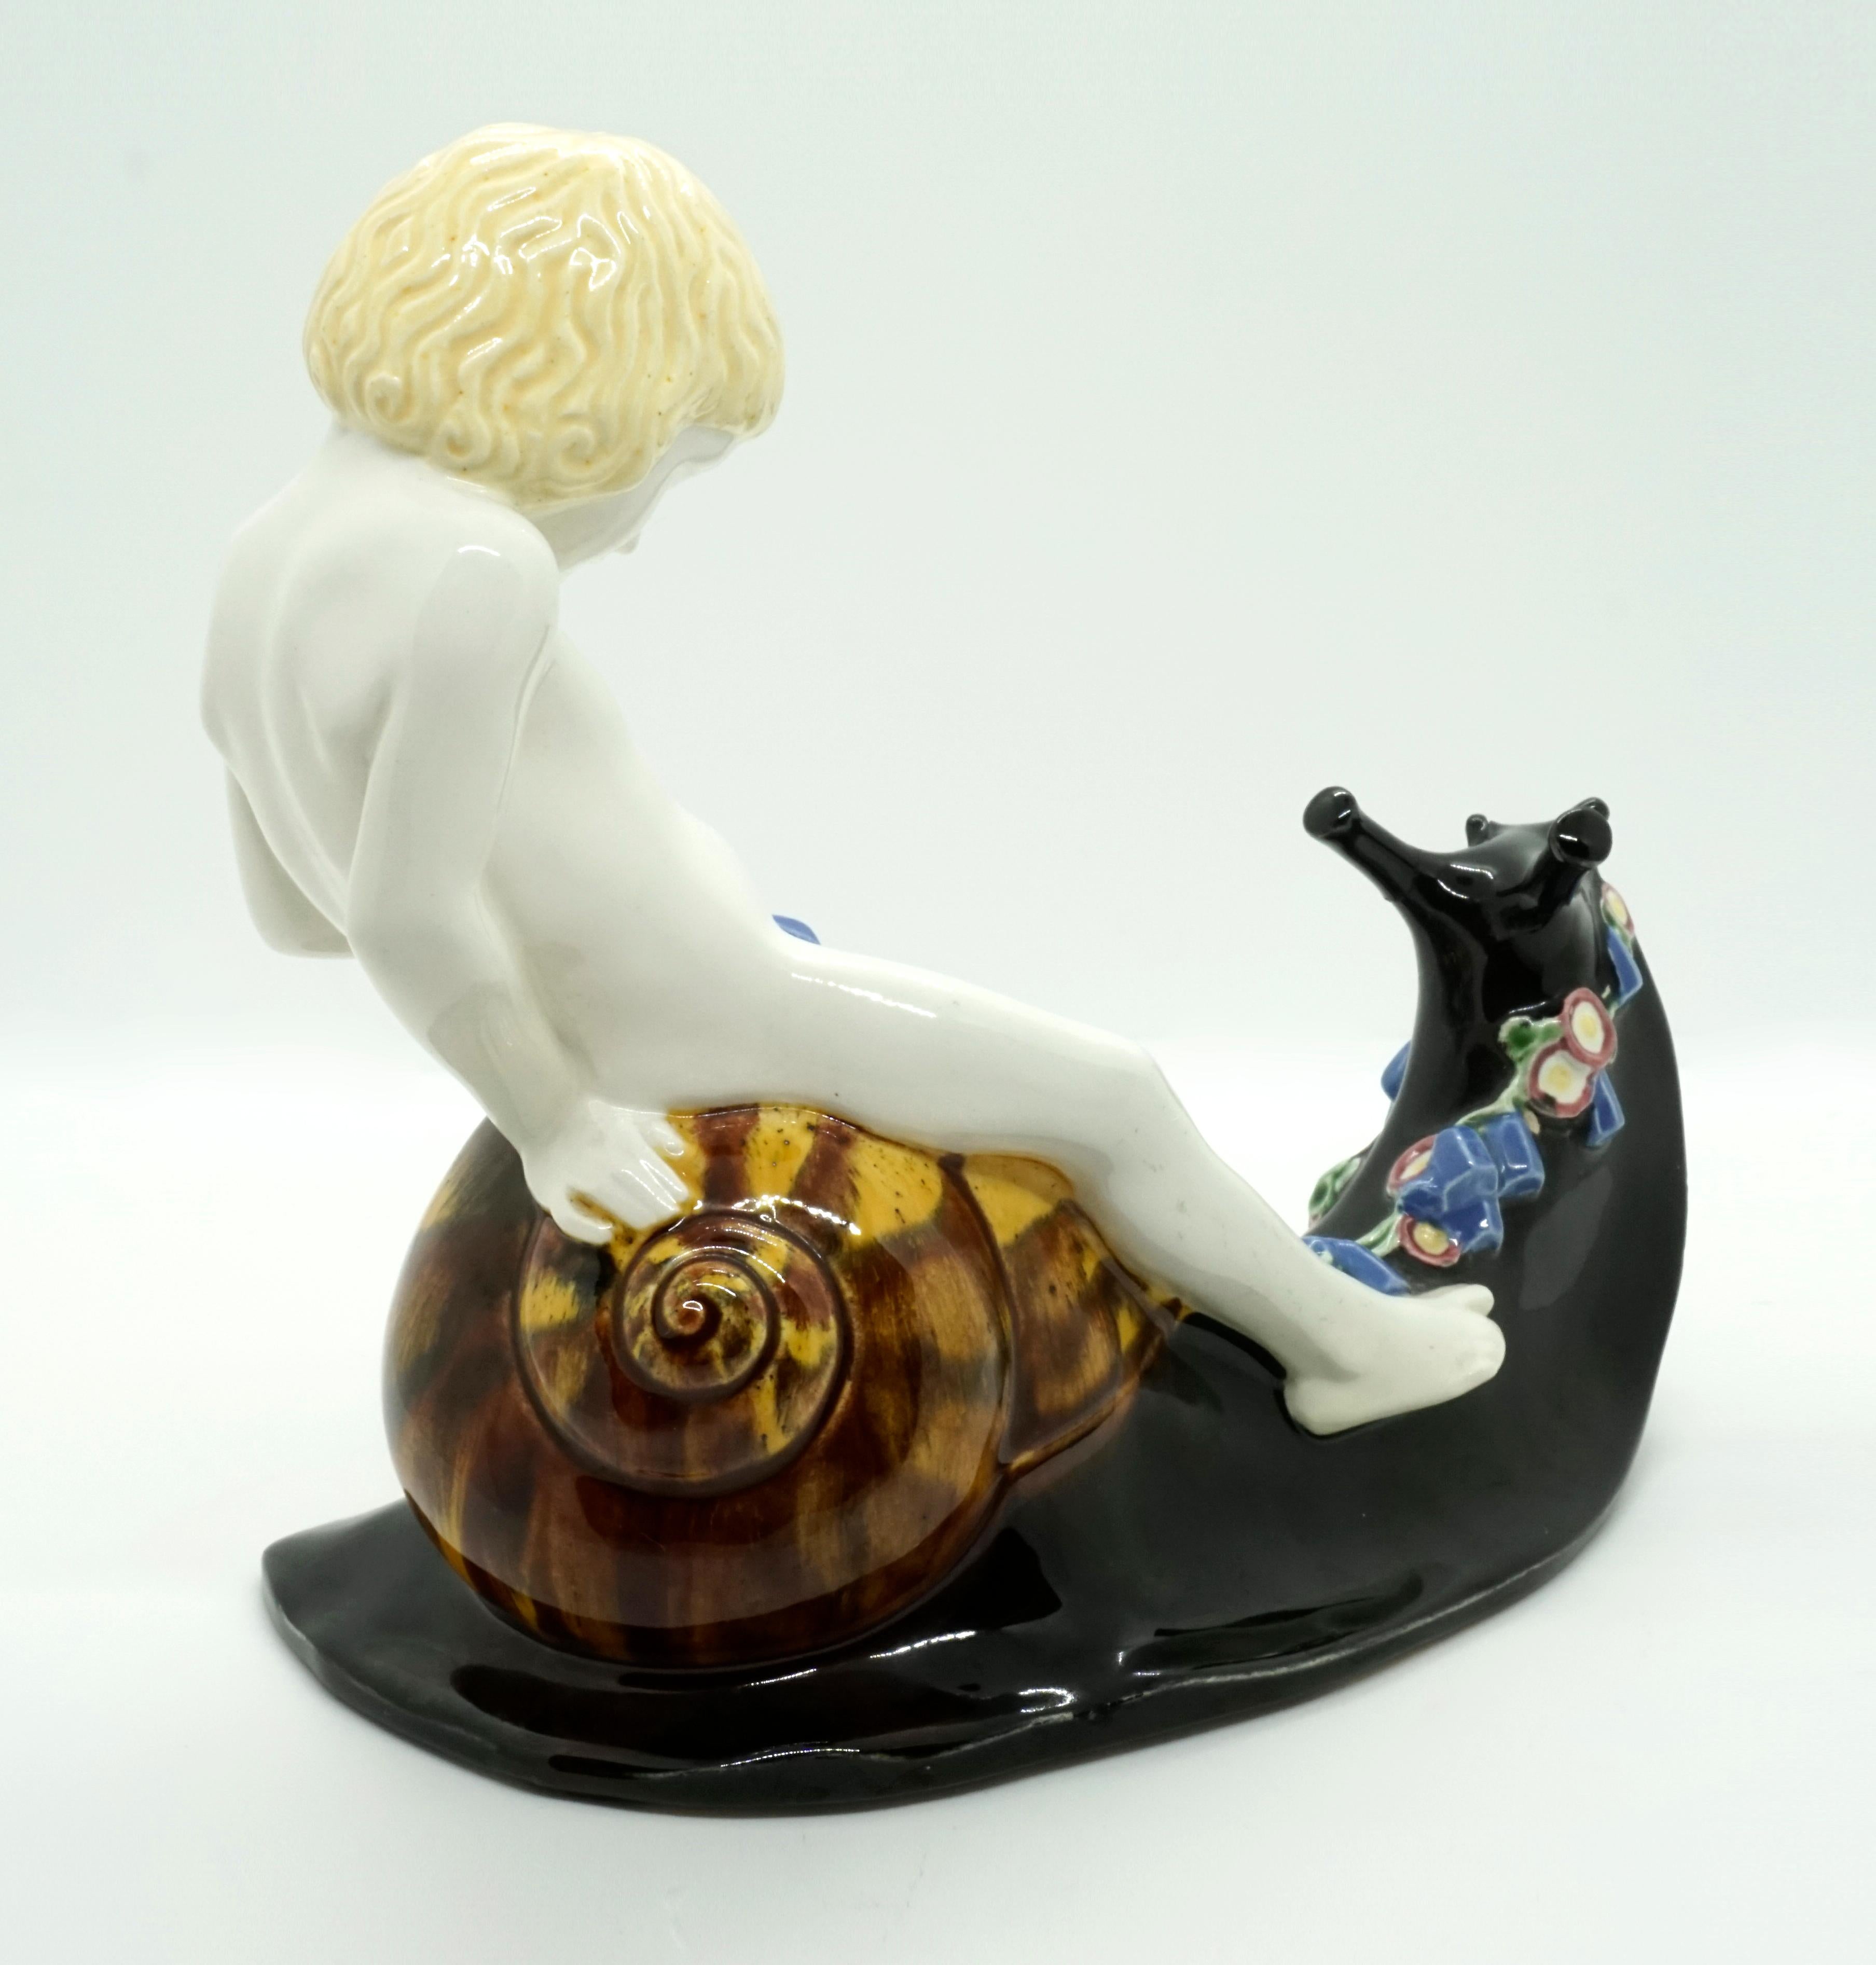 Austrian Art Nouveau Ceramic Figure 'Snail Rider' by Michael Powolny, Vienna, 1913-1917